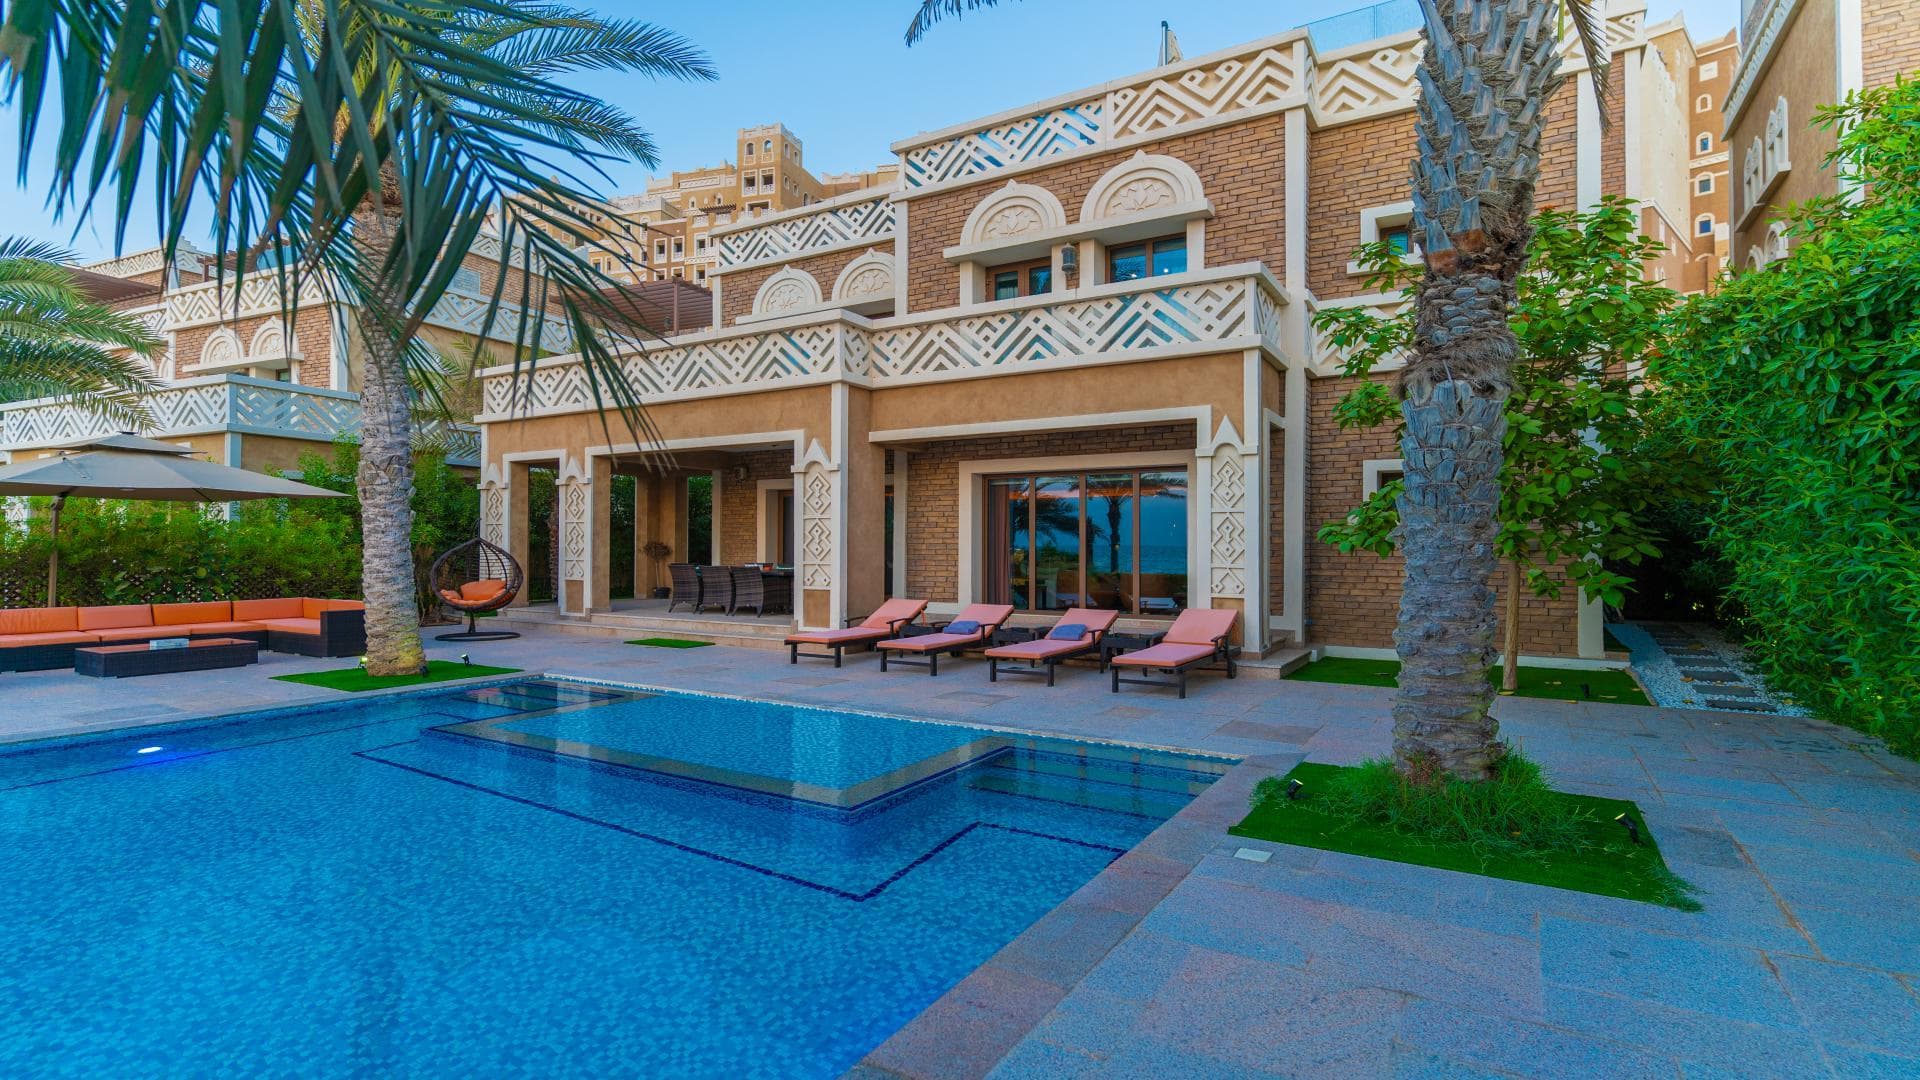 5 Bedroom Villa For Sale Kingdom Of Sheba Lp37396 26d724eb1d096a00.jpg